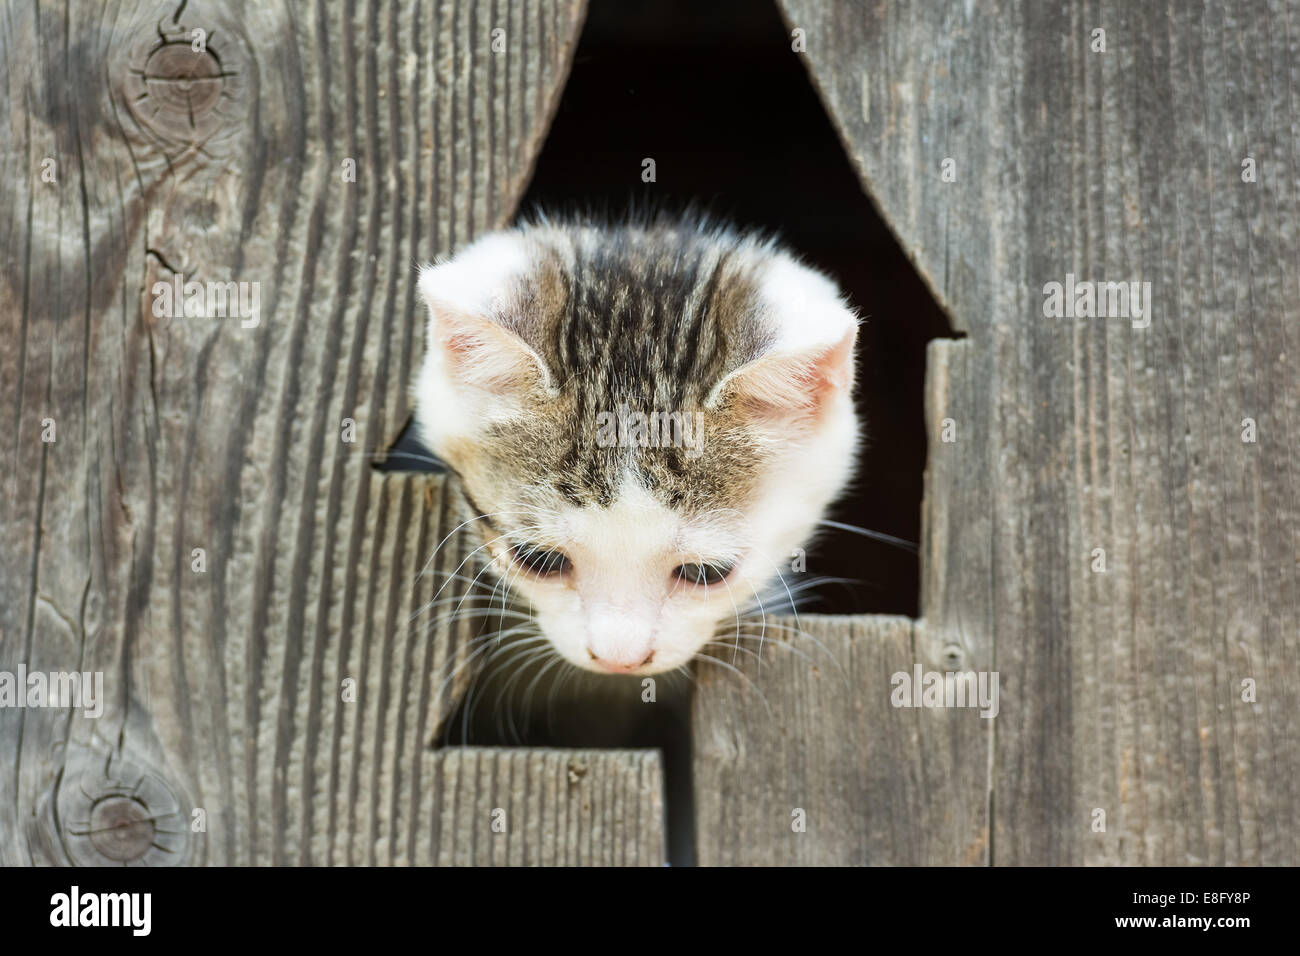 Cute Small Baby Kitty Cat Portrait Stock Photo